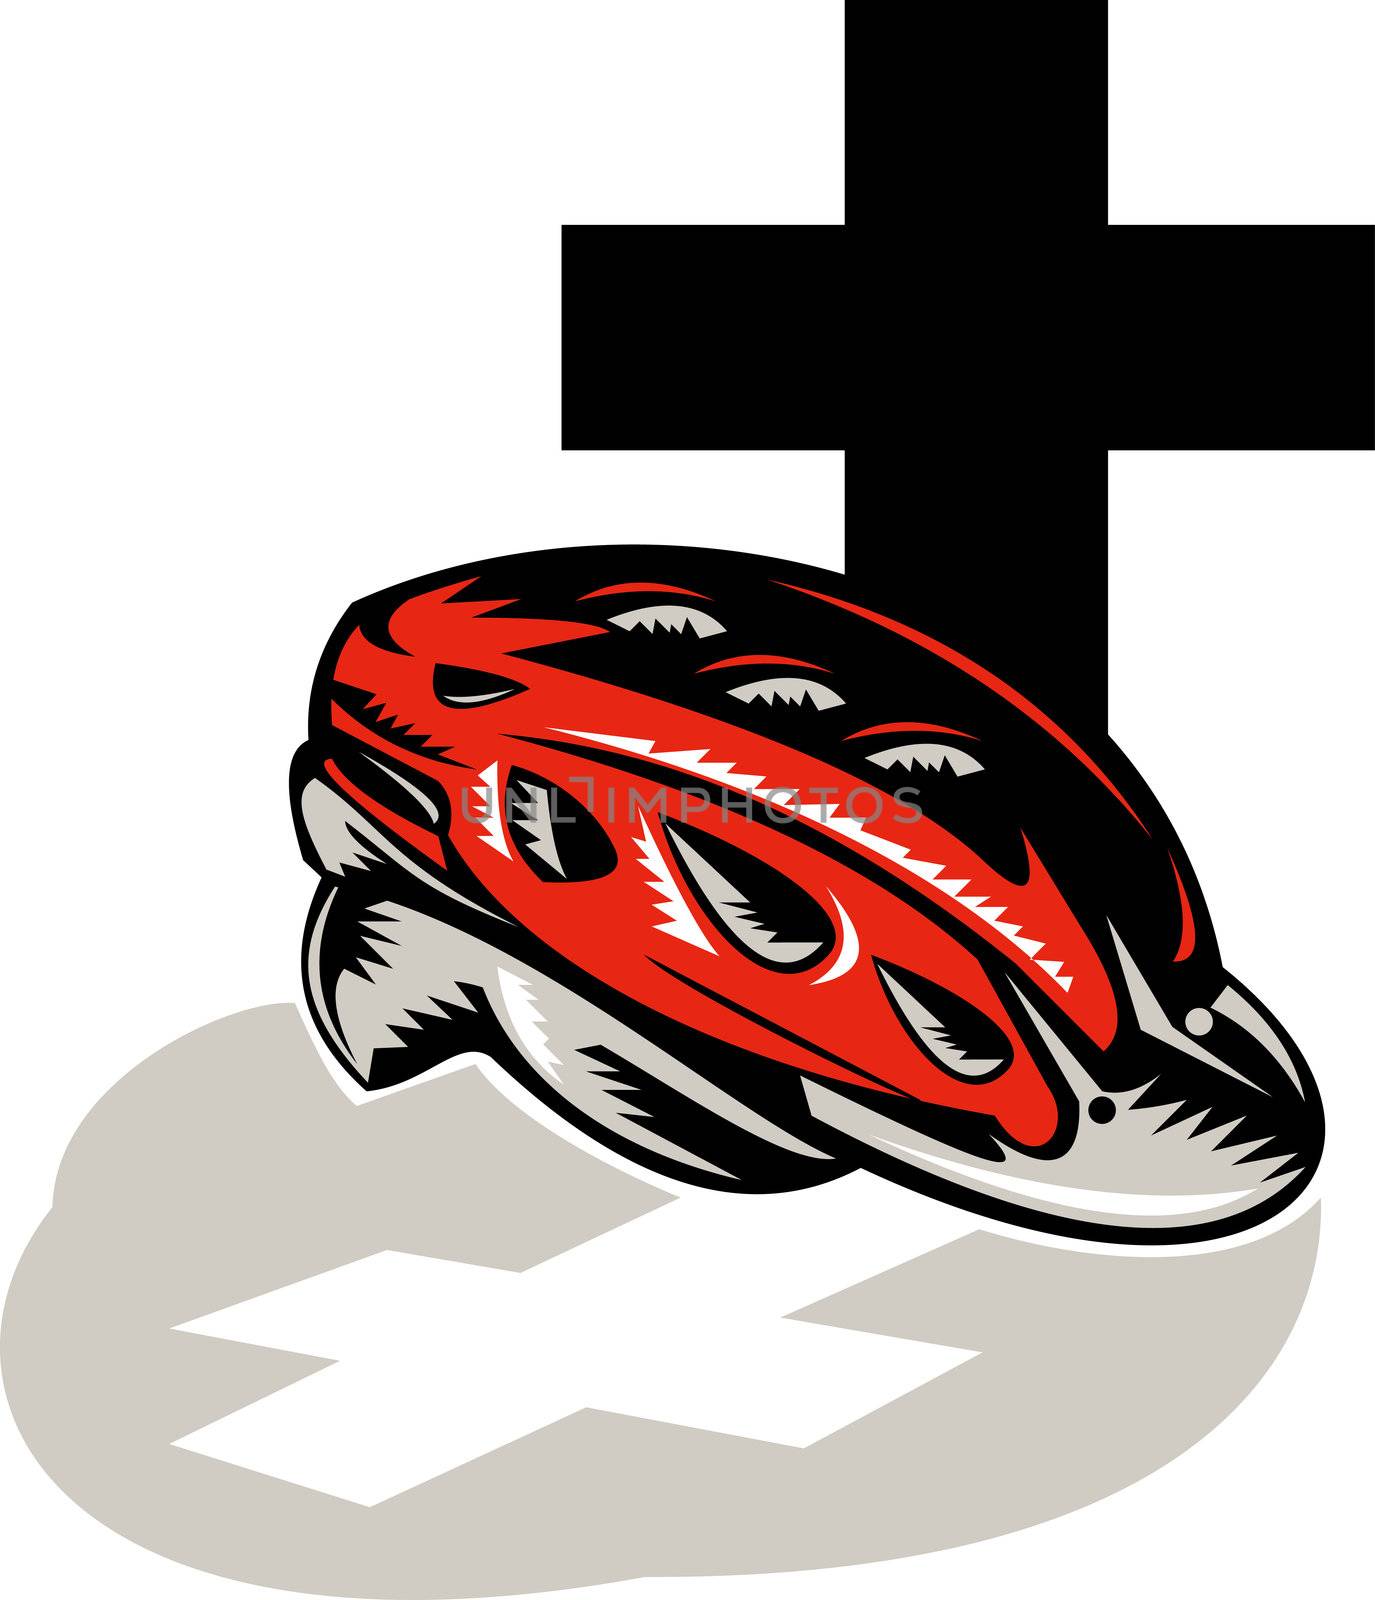 cycling crash helmet with cross by patrimonio